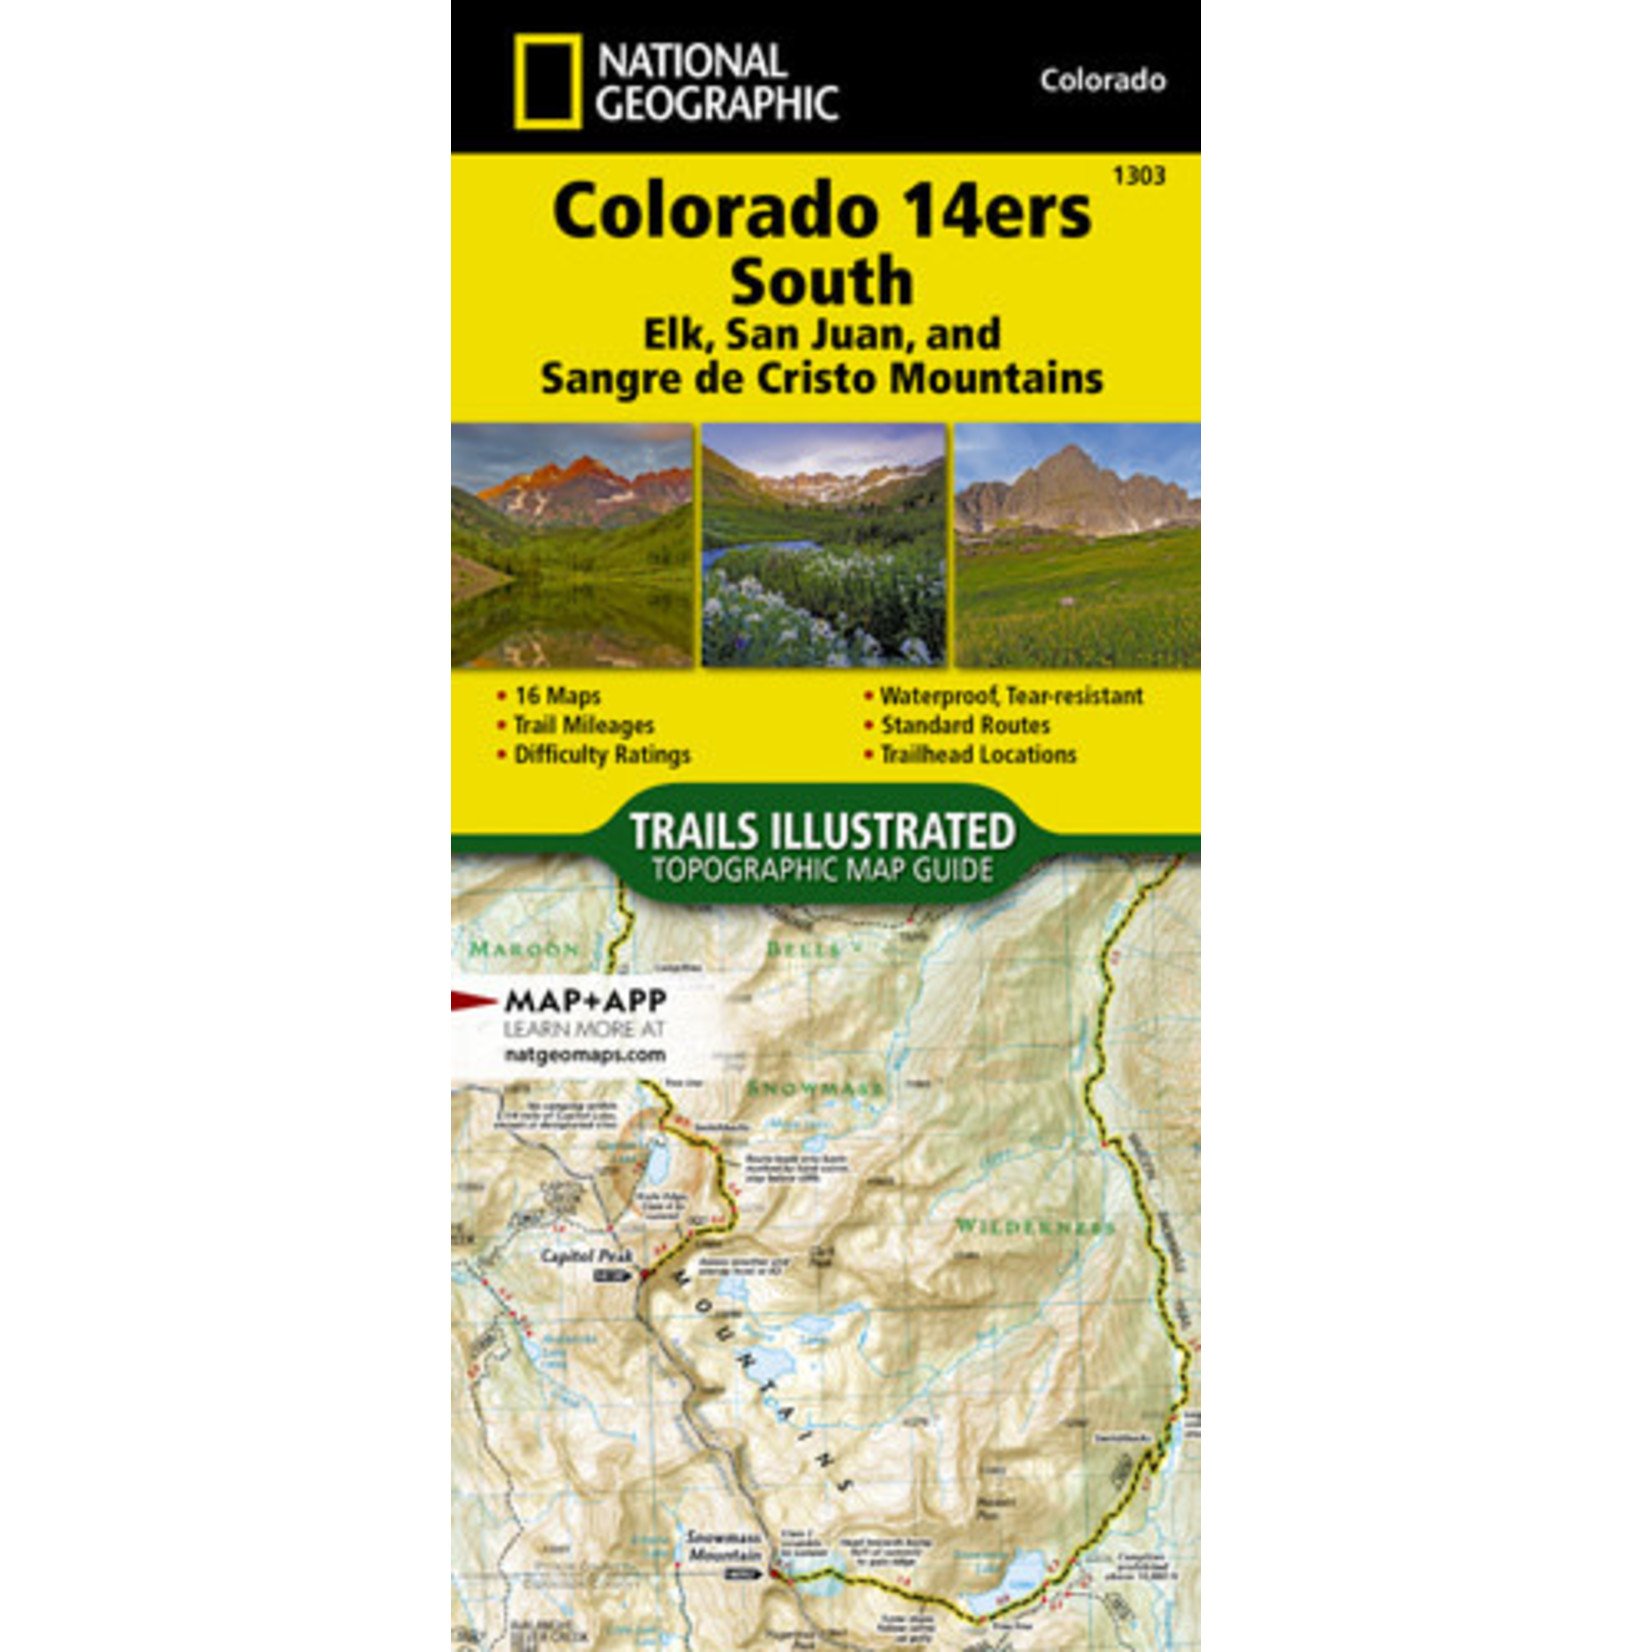 colorado-14ers-south-1303-san-juan-mountains-association-online-store